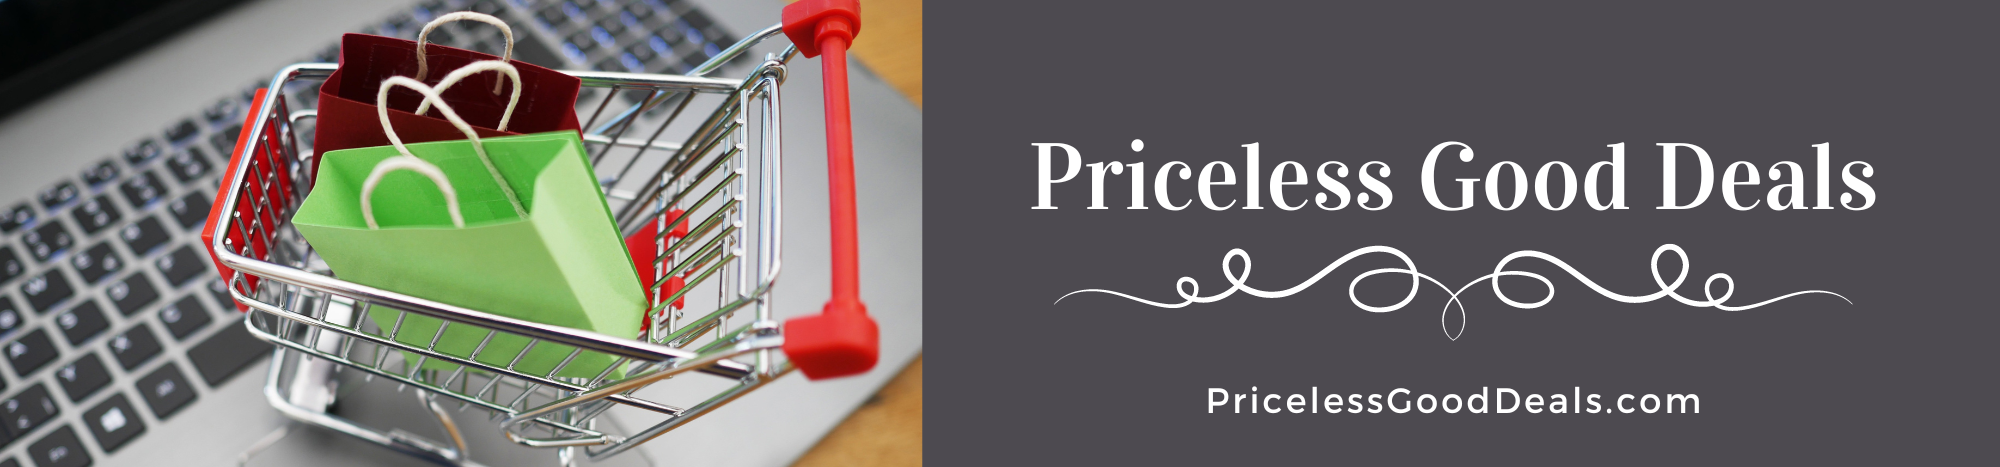 Priceless Good Deals Online Store